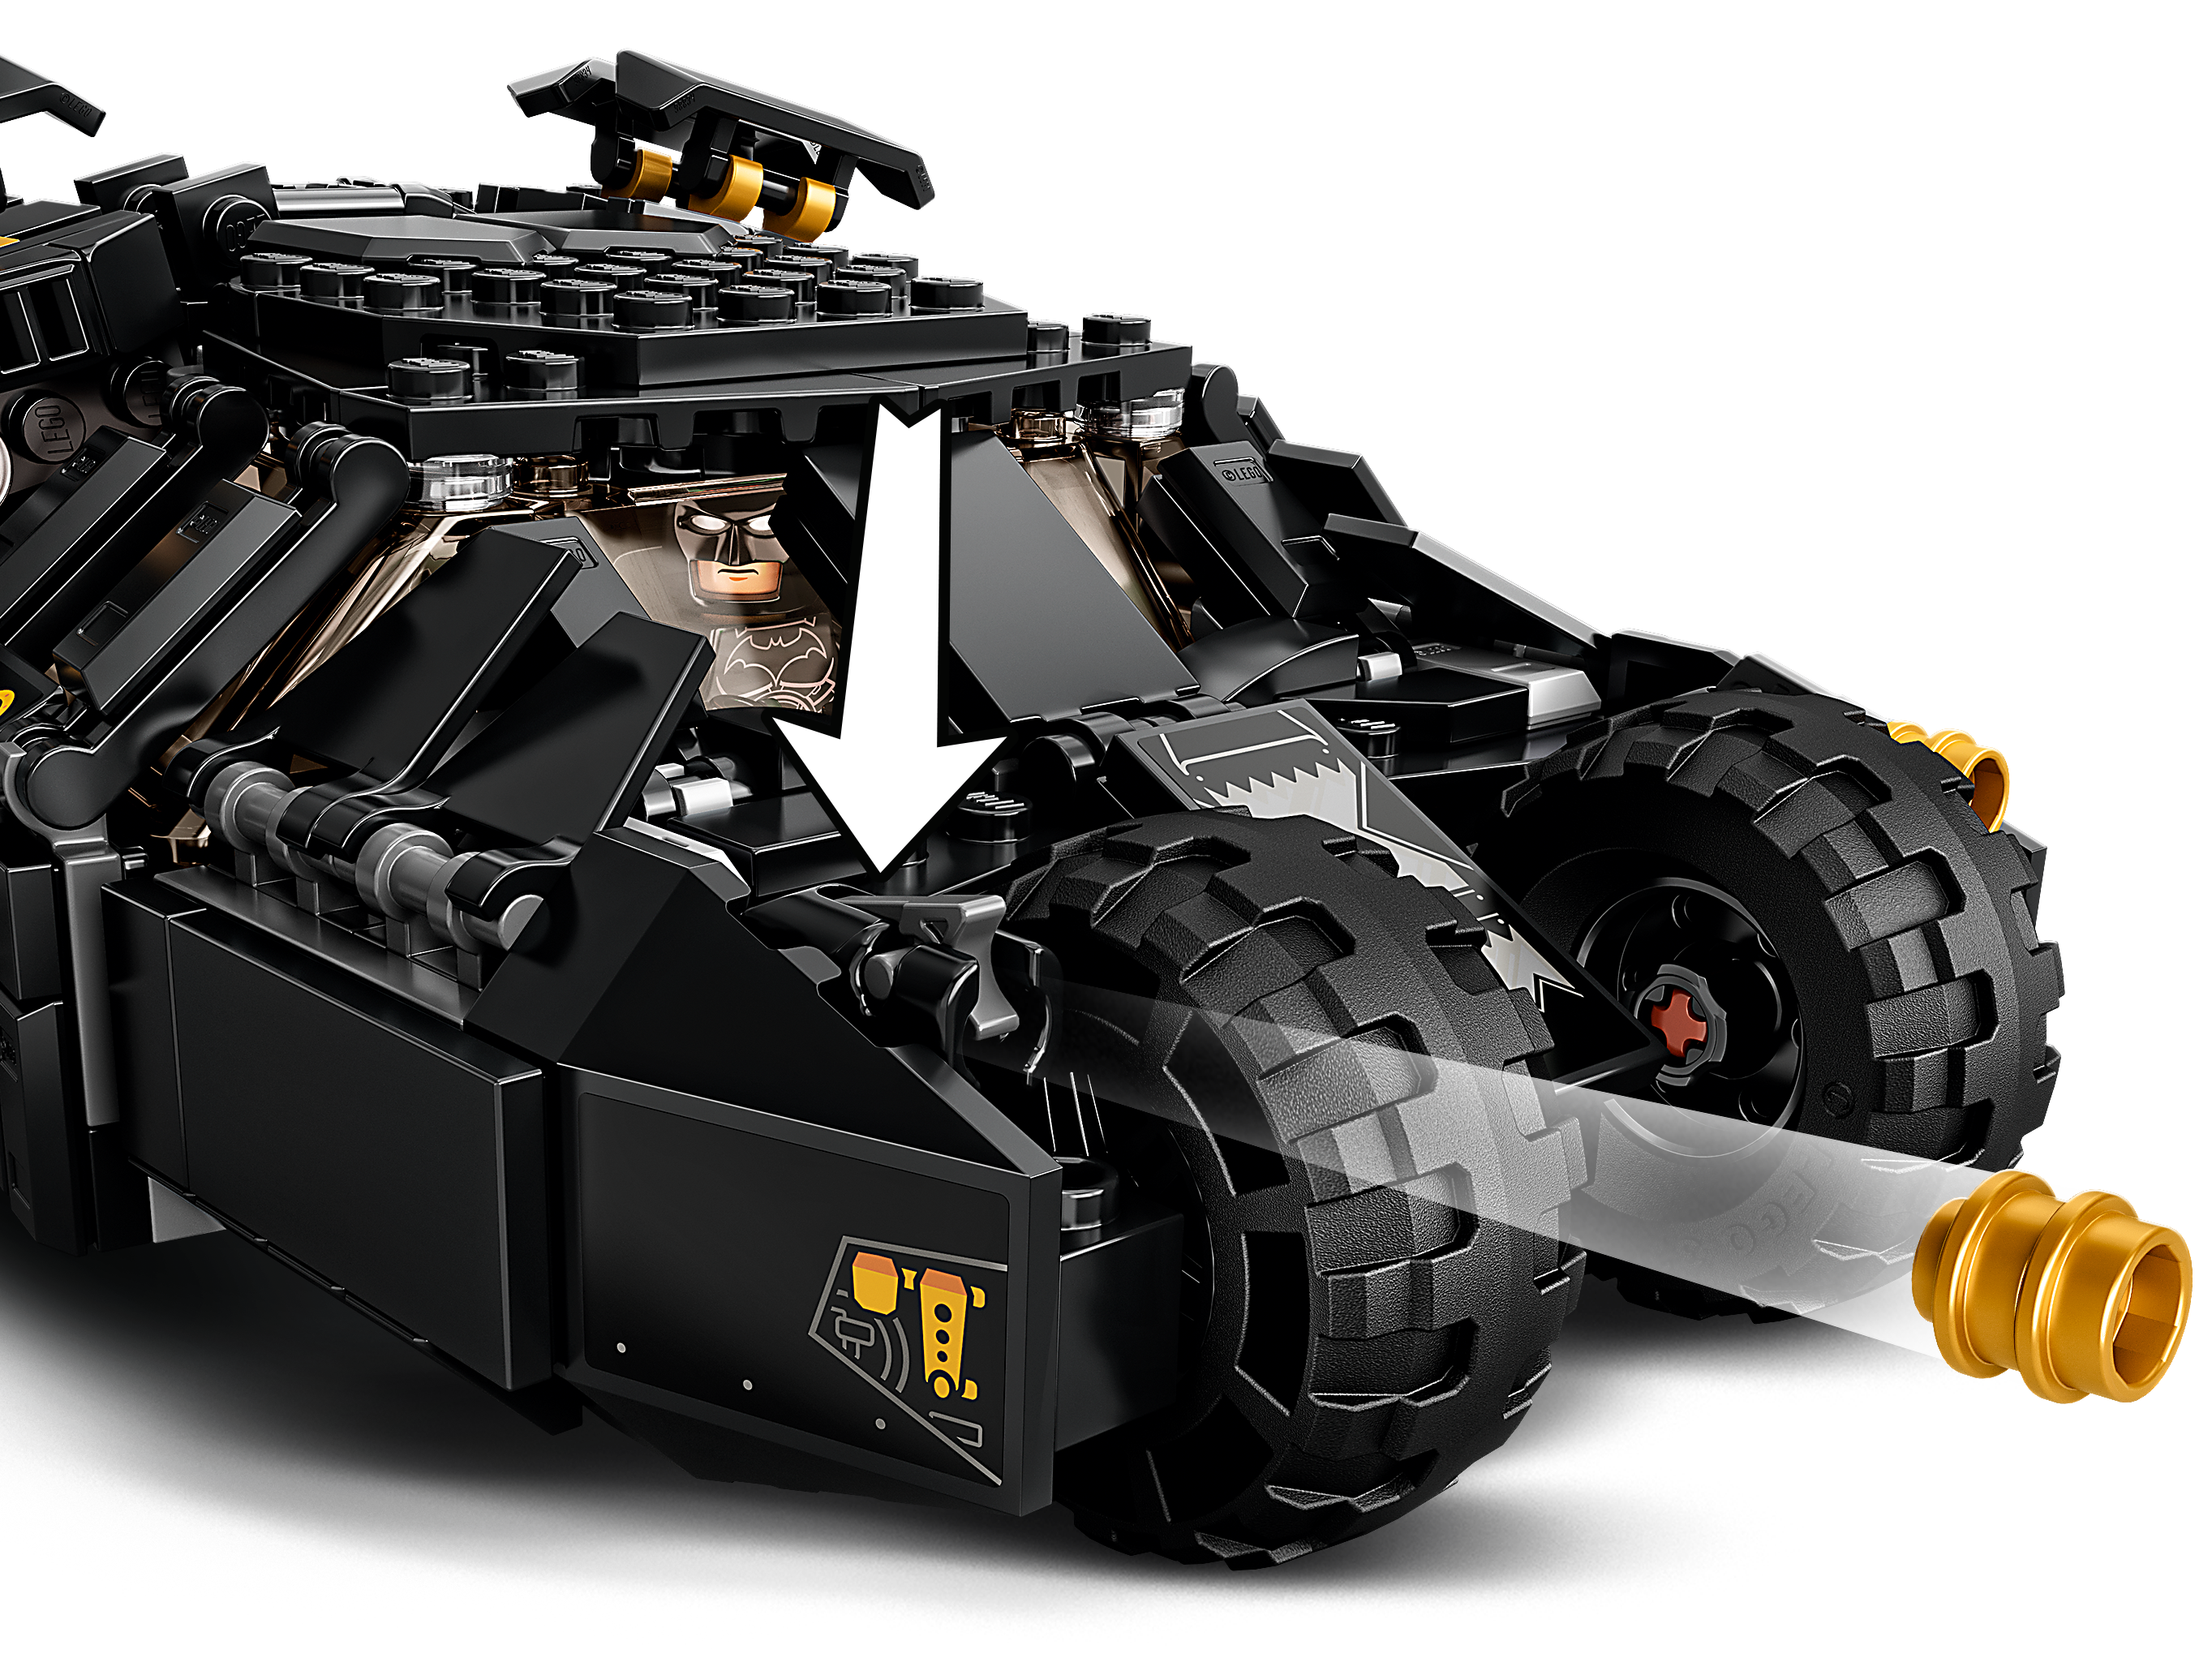 LEGO® DC Batman™ Batmobile™ Tumbler - 76240 – LEGOLAND New York Resort